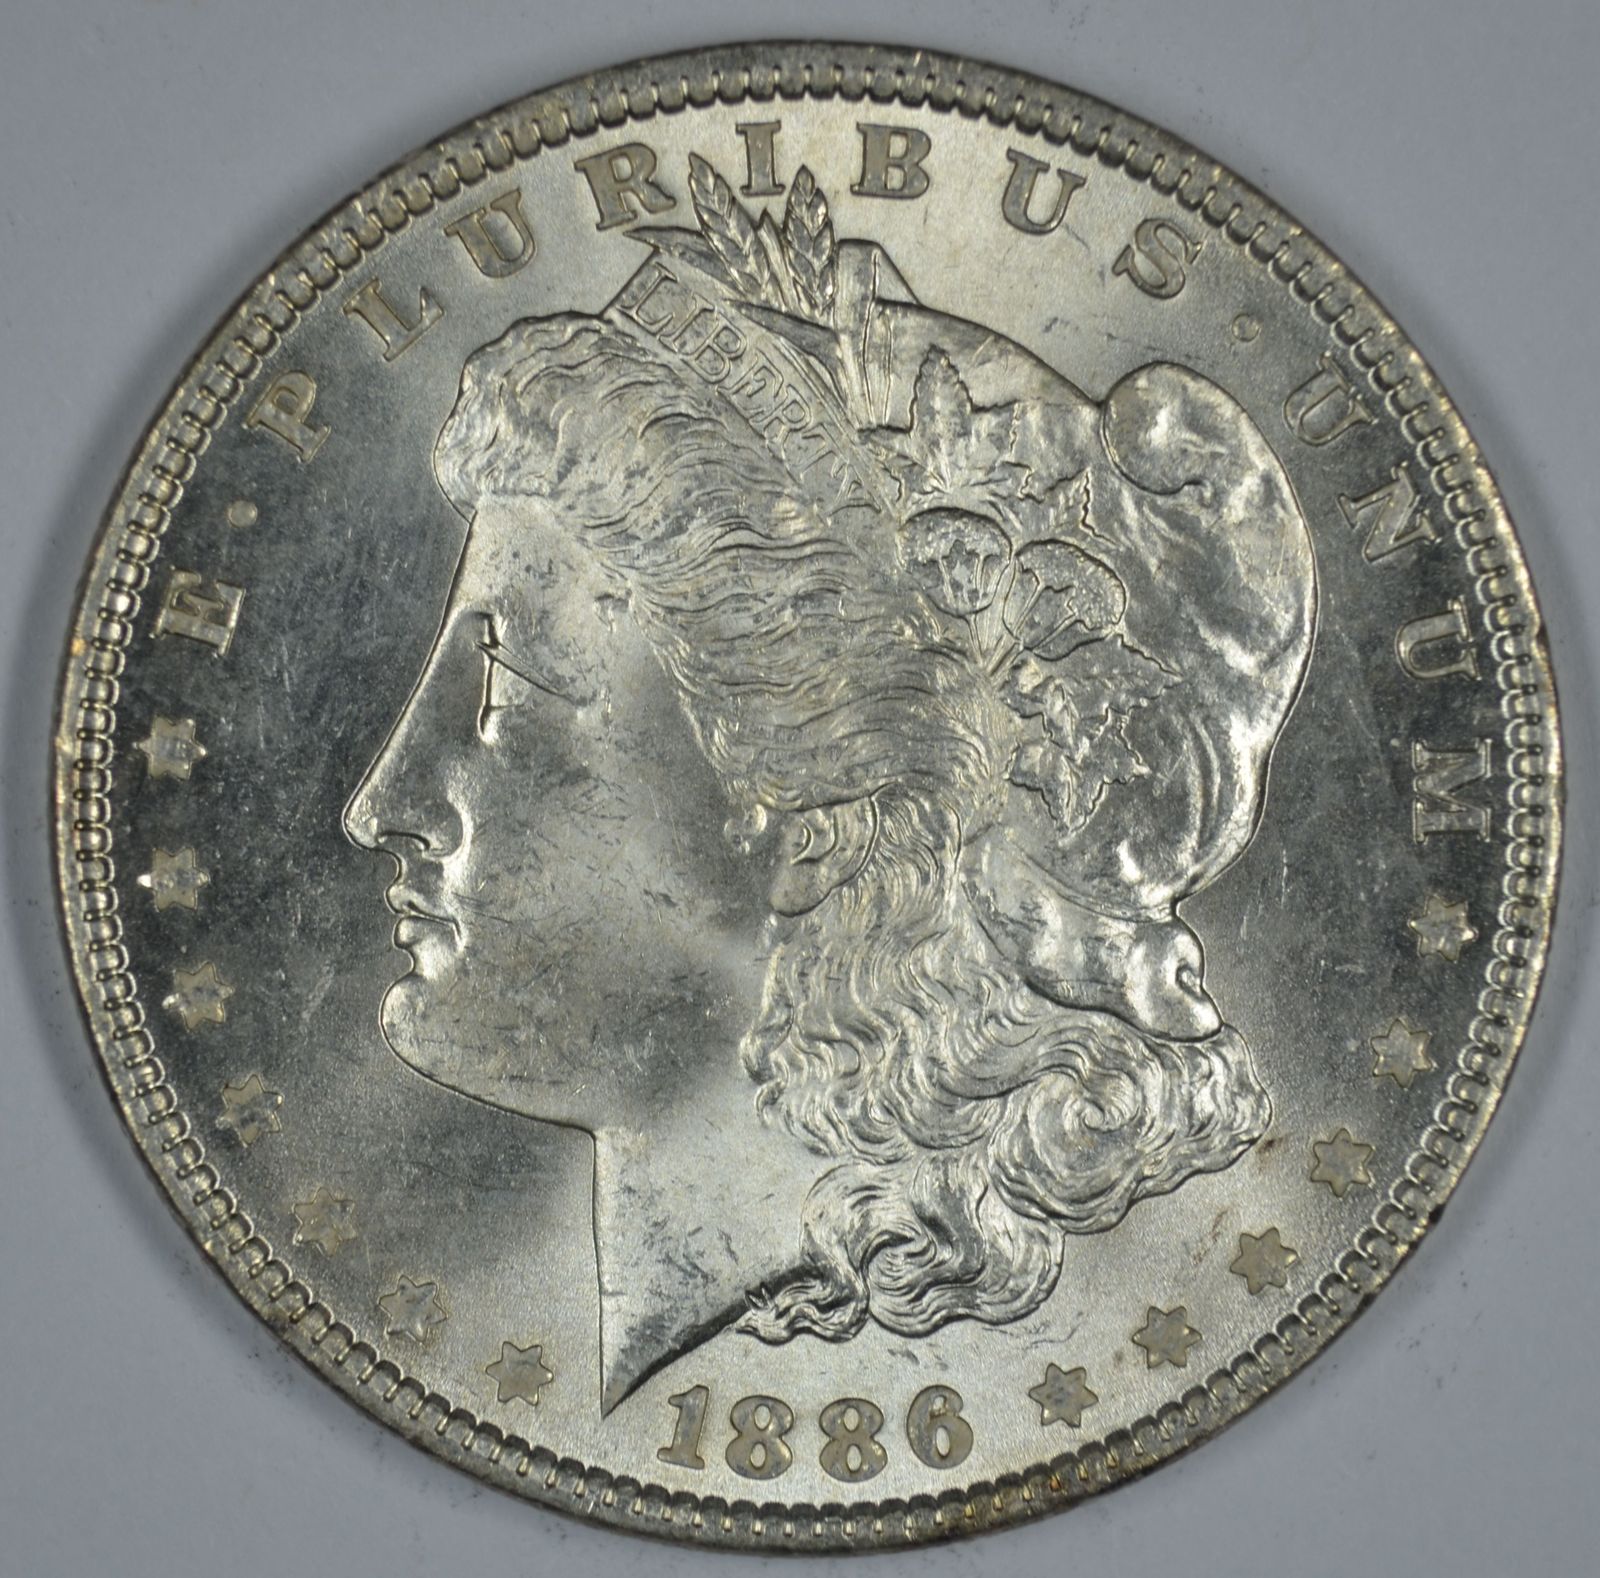 Primary image for 1886 P Morgan silver dollar BU details